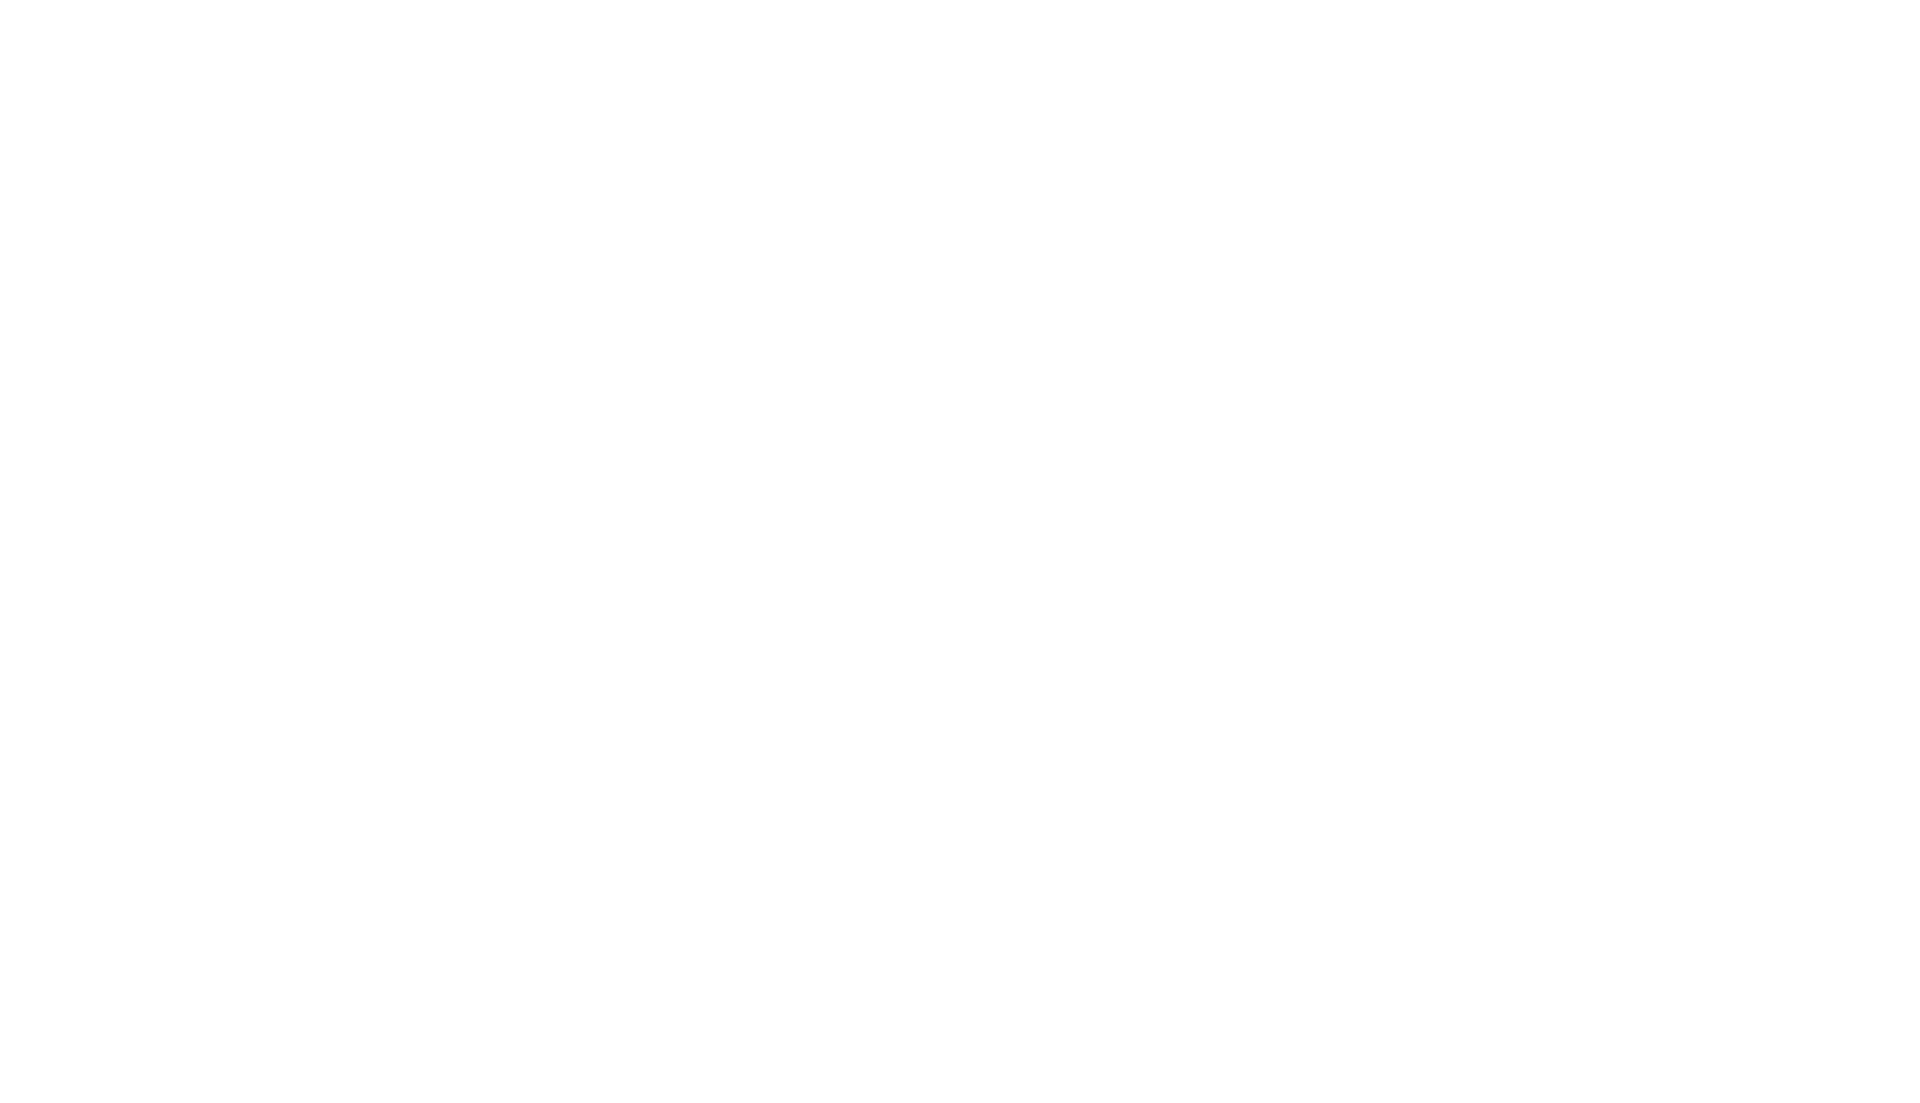 Windward communities logo